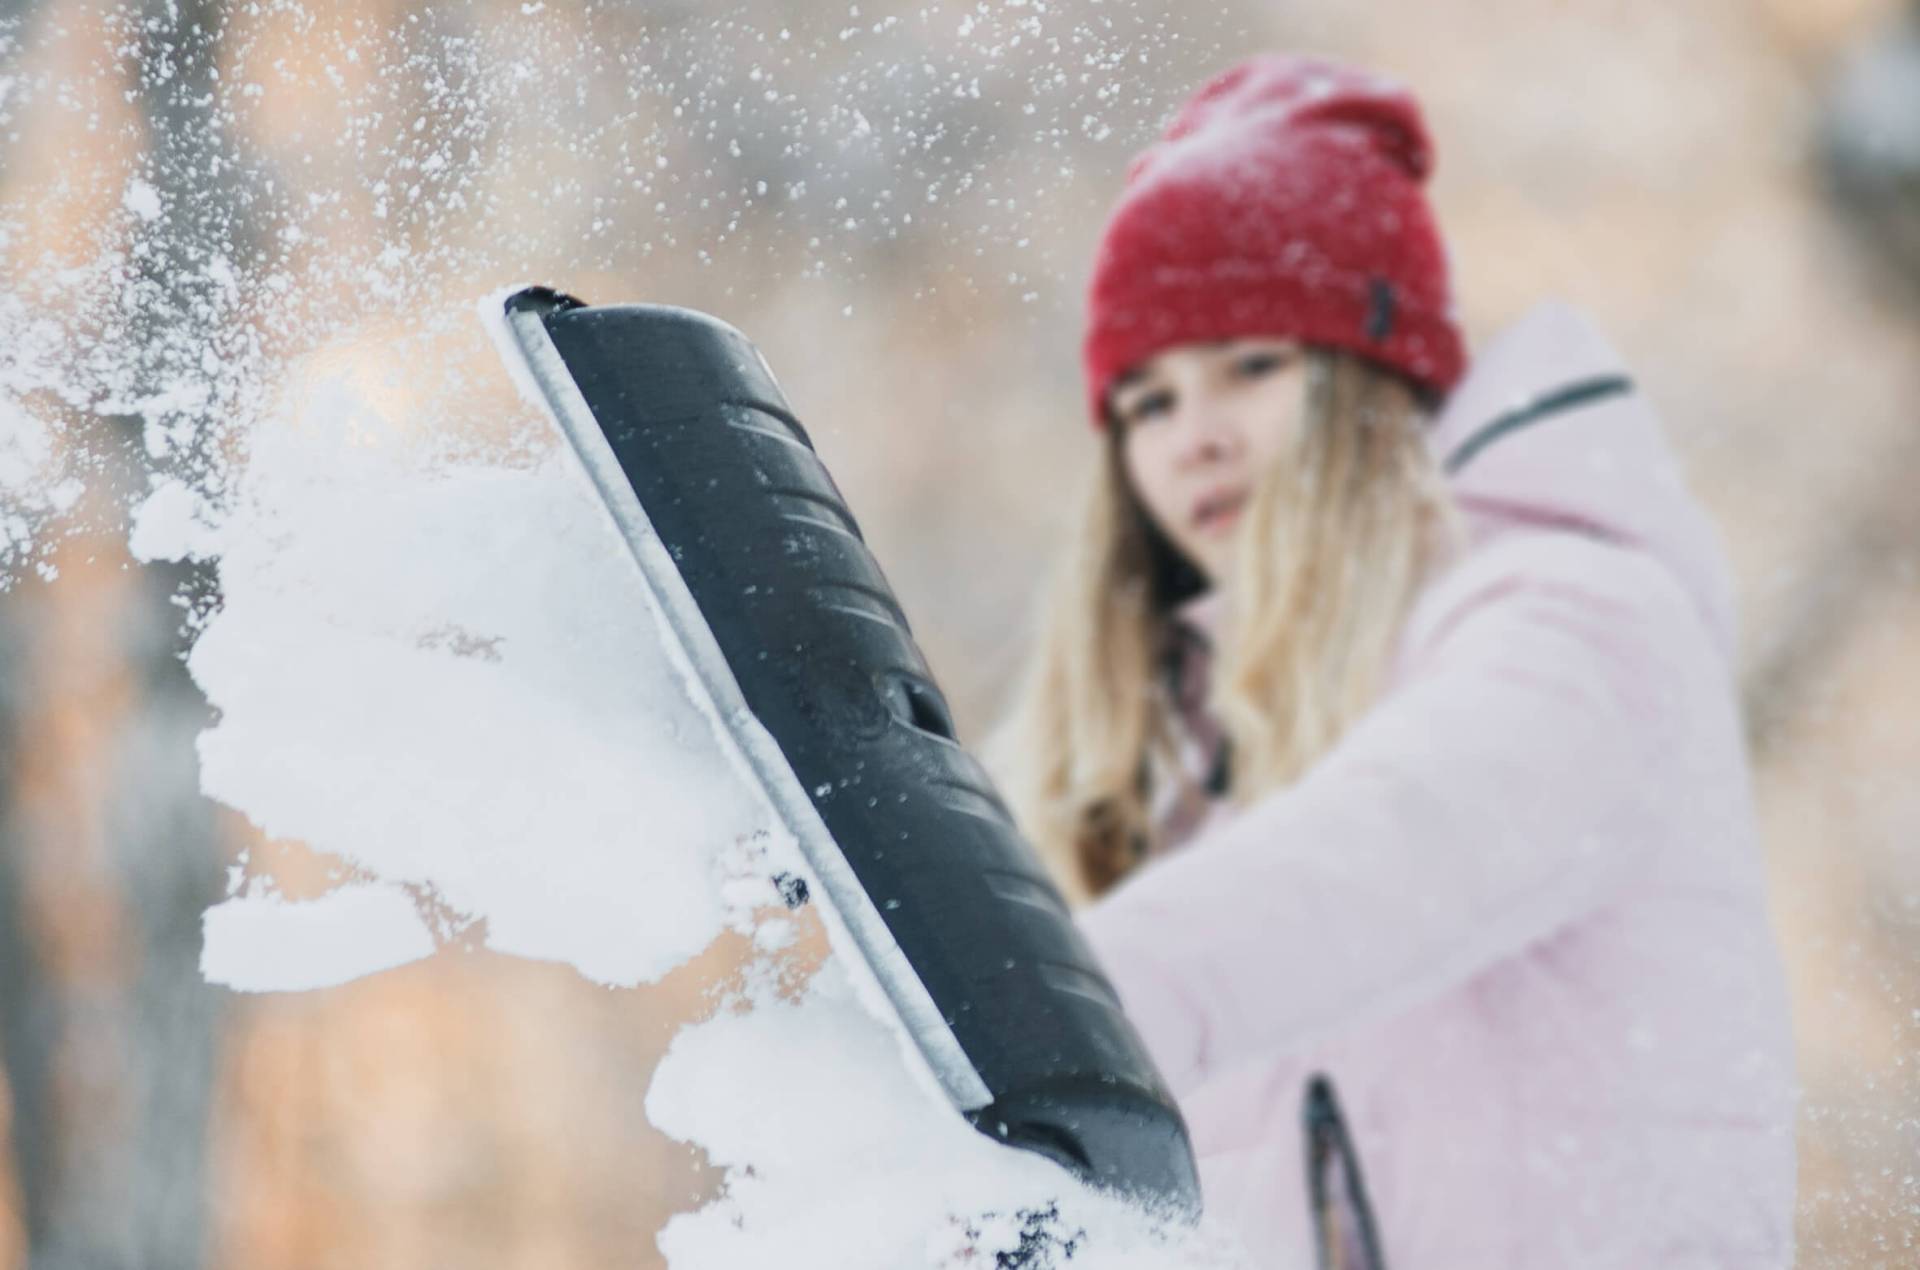 Girl shovelling snow as a chore for allowance